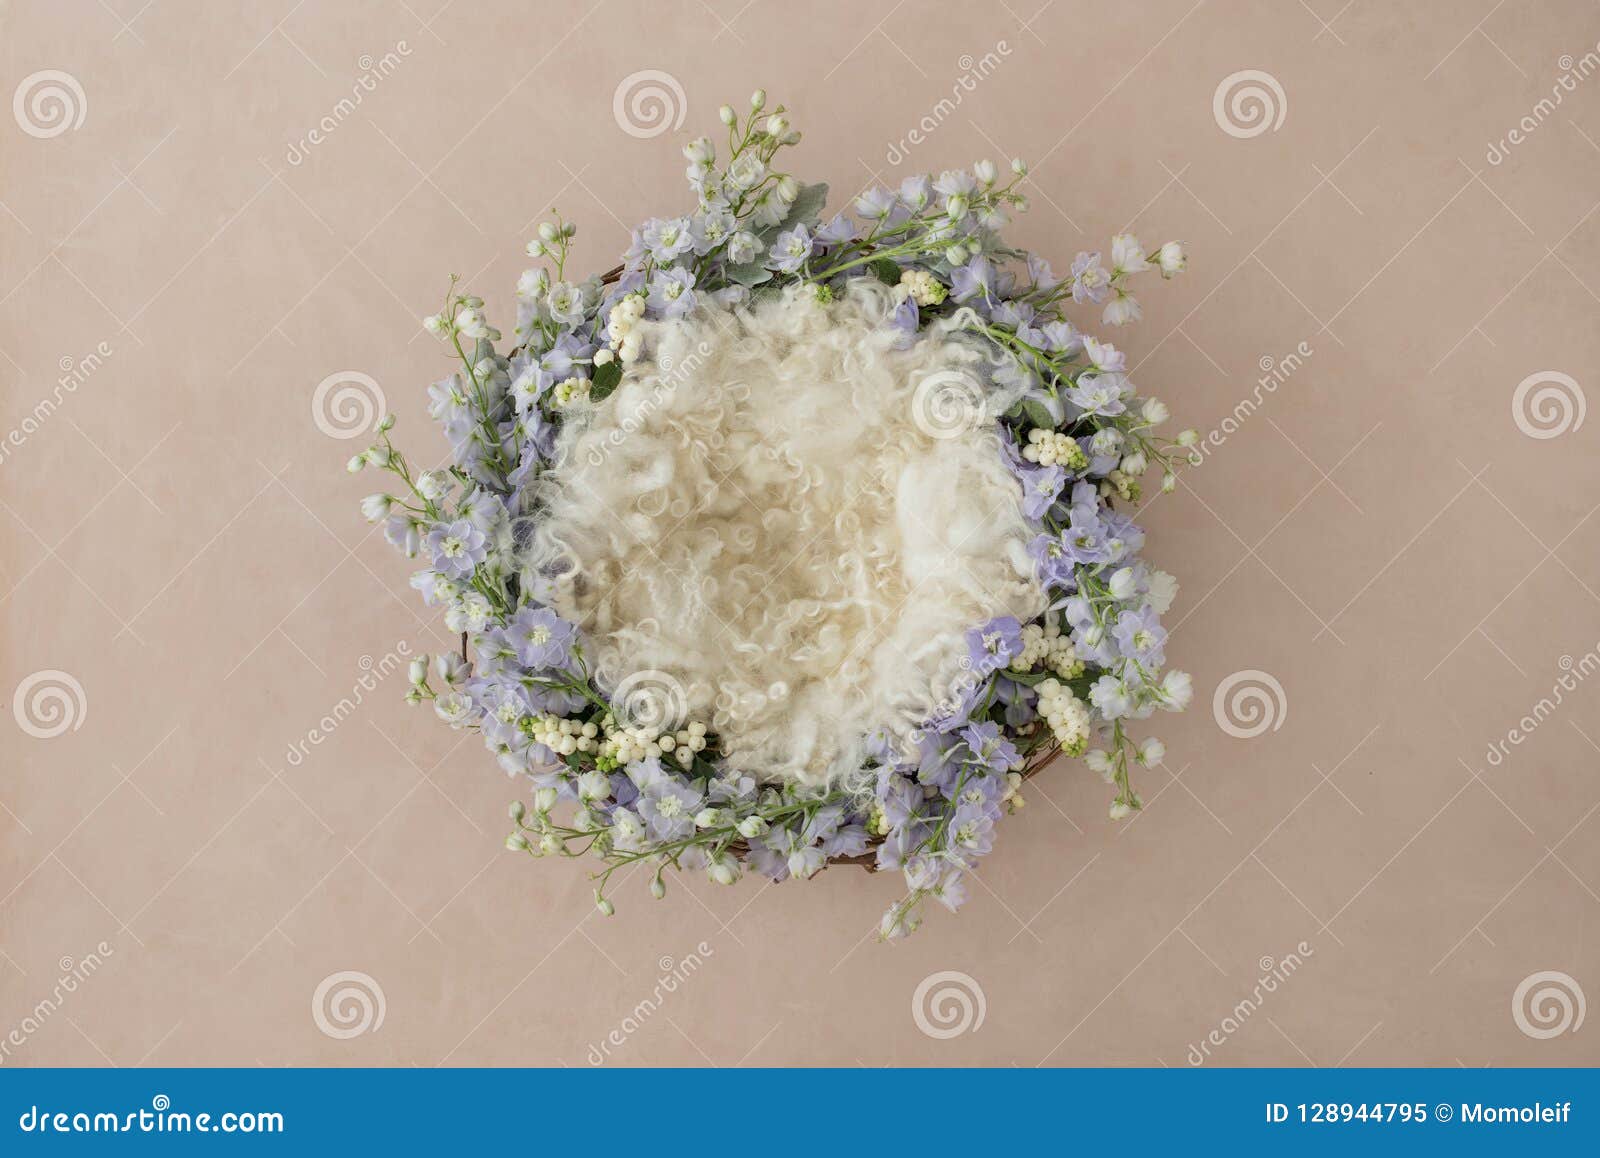 lovely flower background for newborn baby, concept of newborn ba